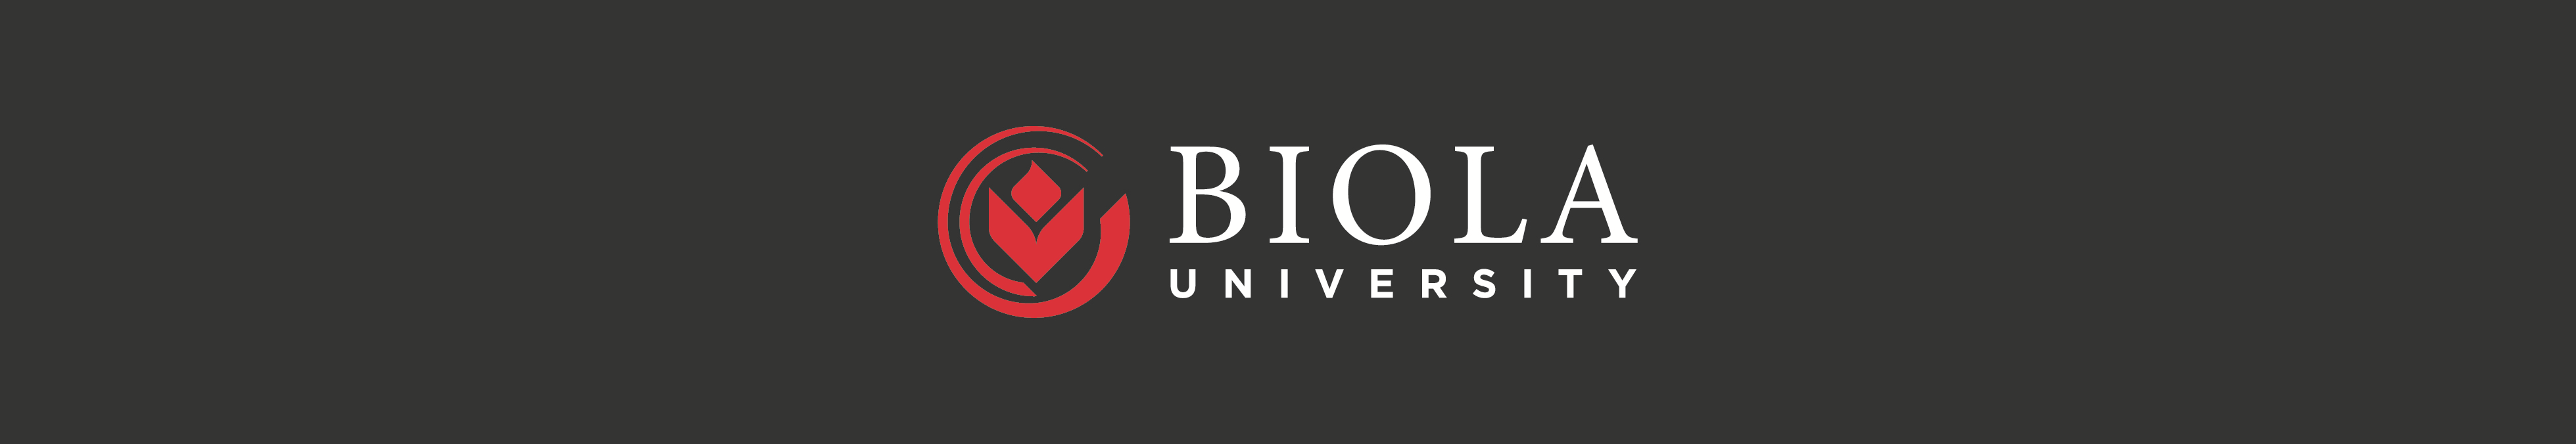 Biola University Aid Year 2